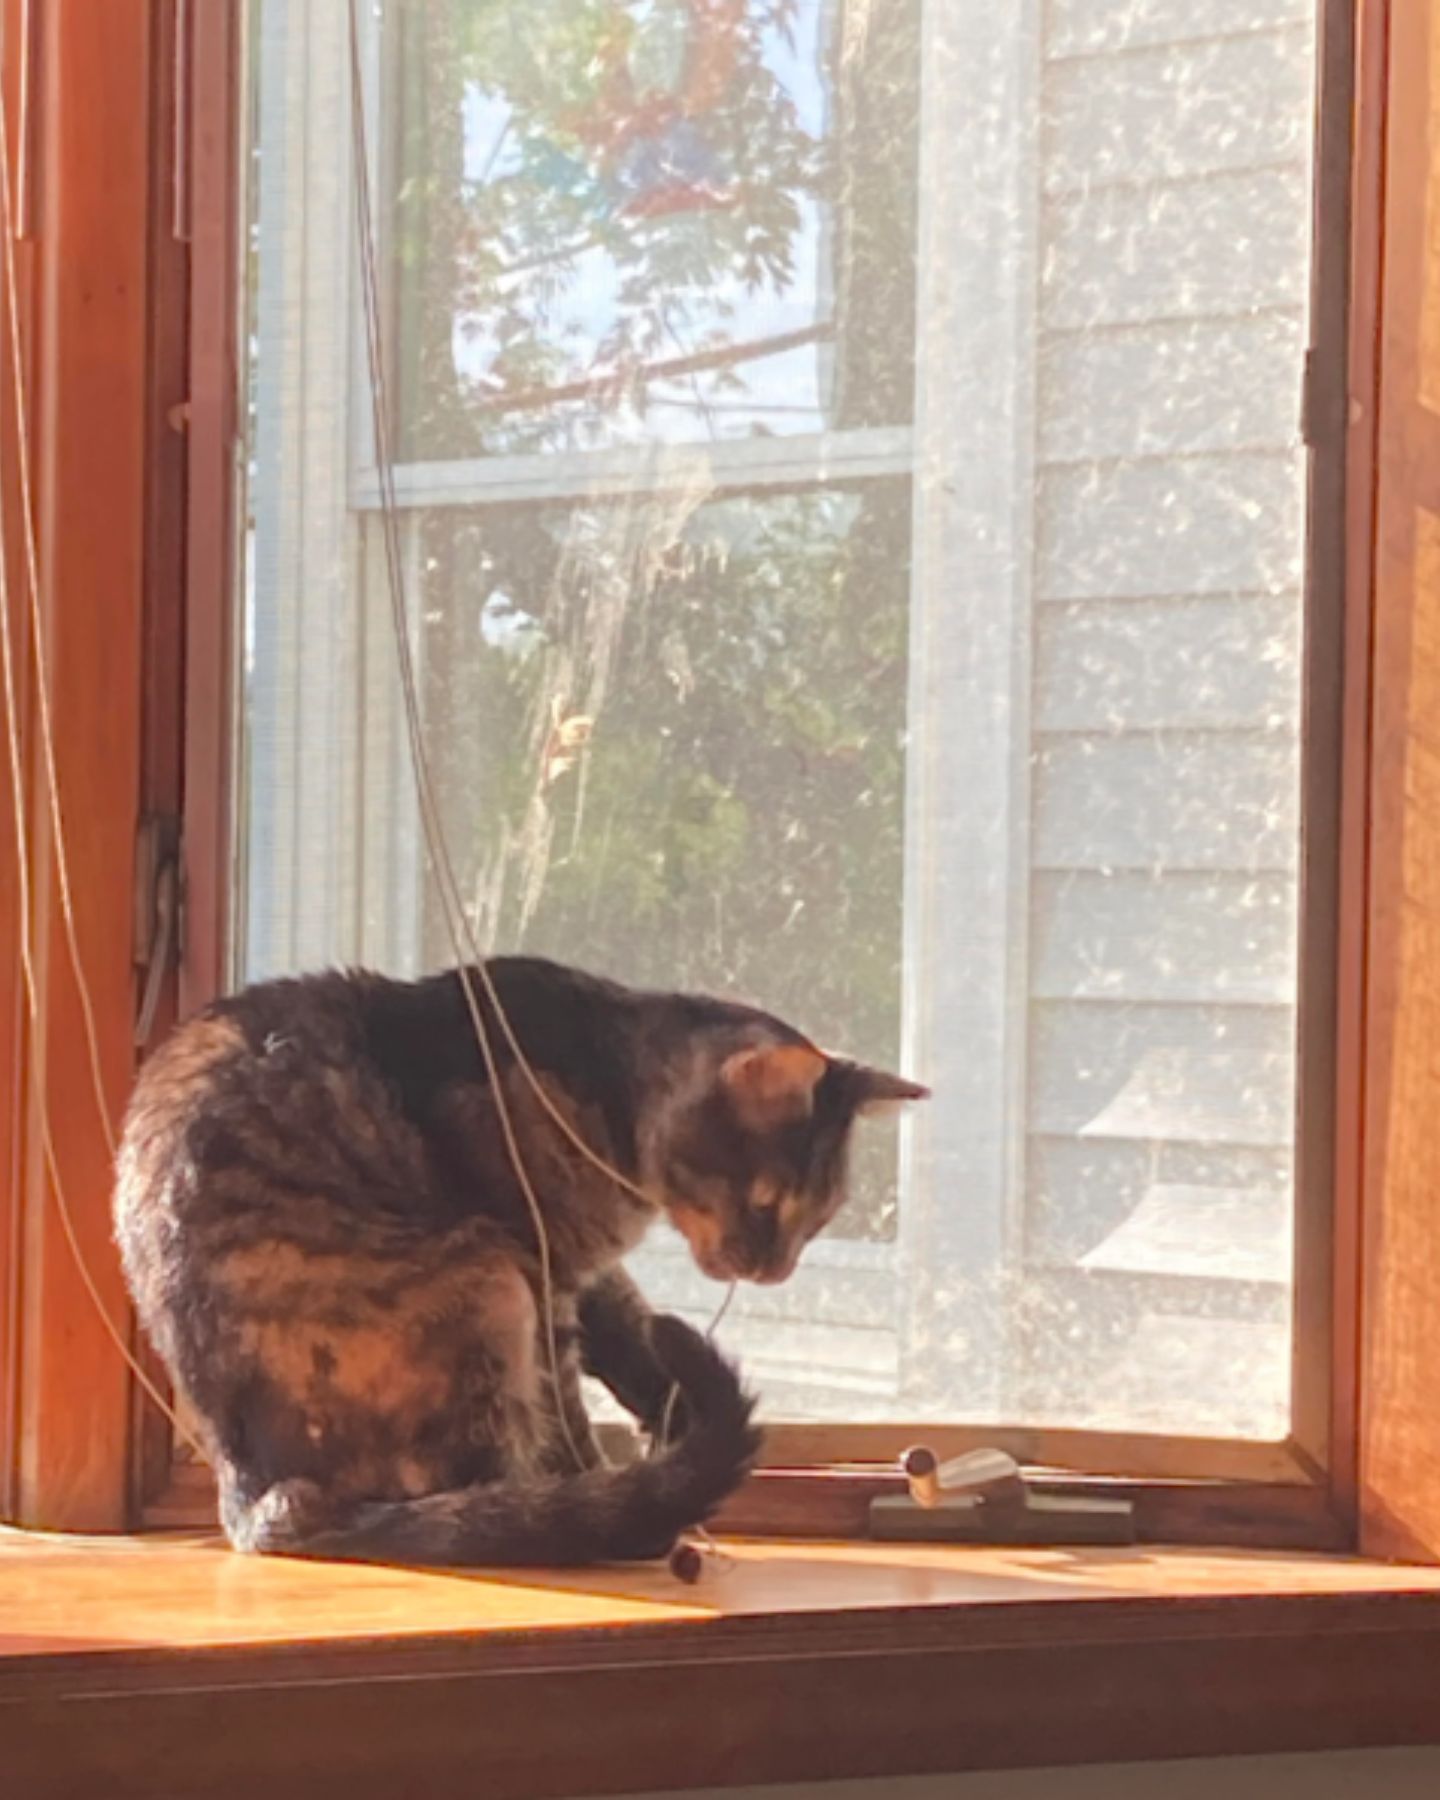 cat sitting on a window